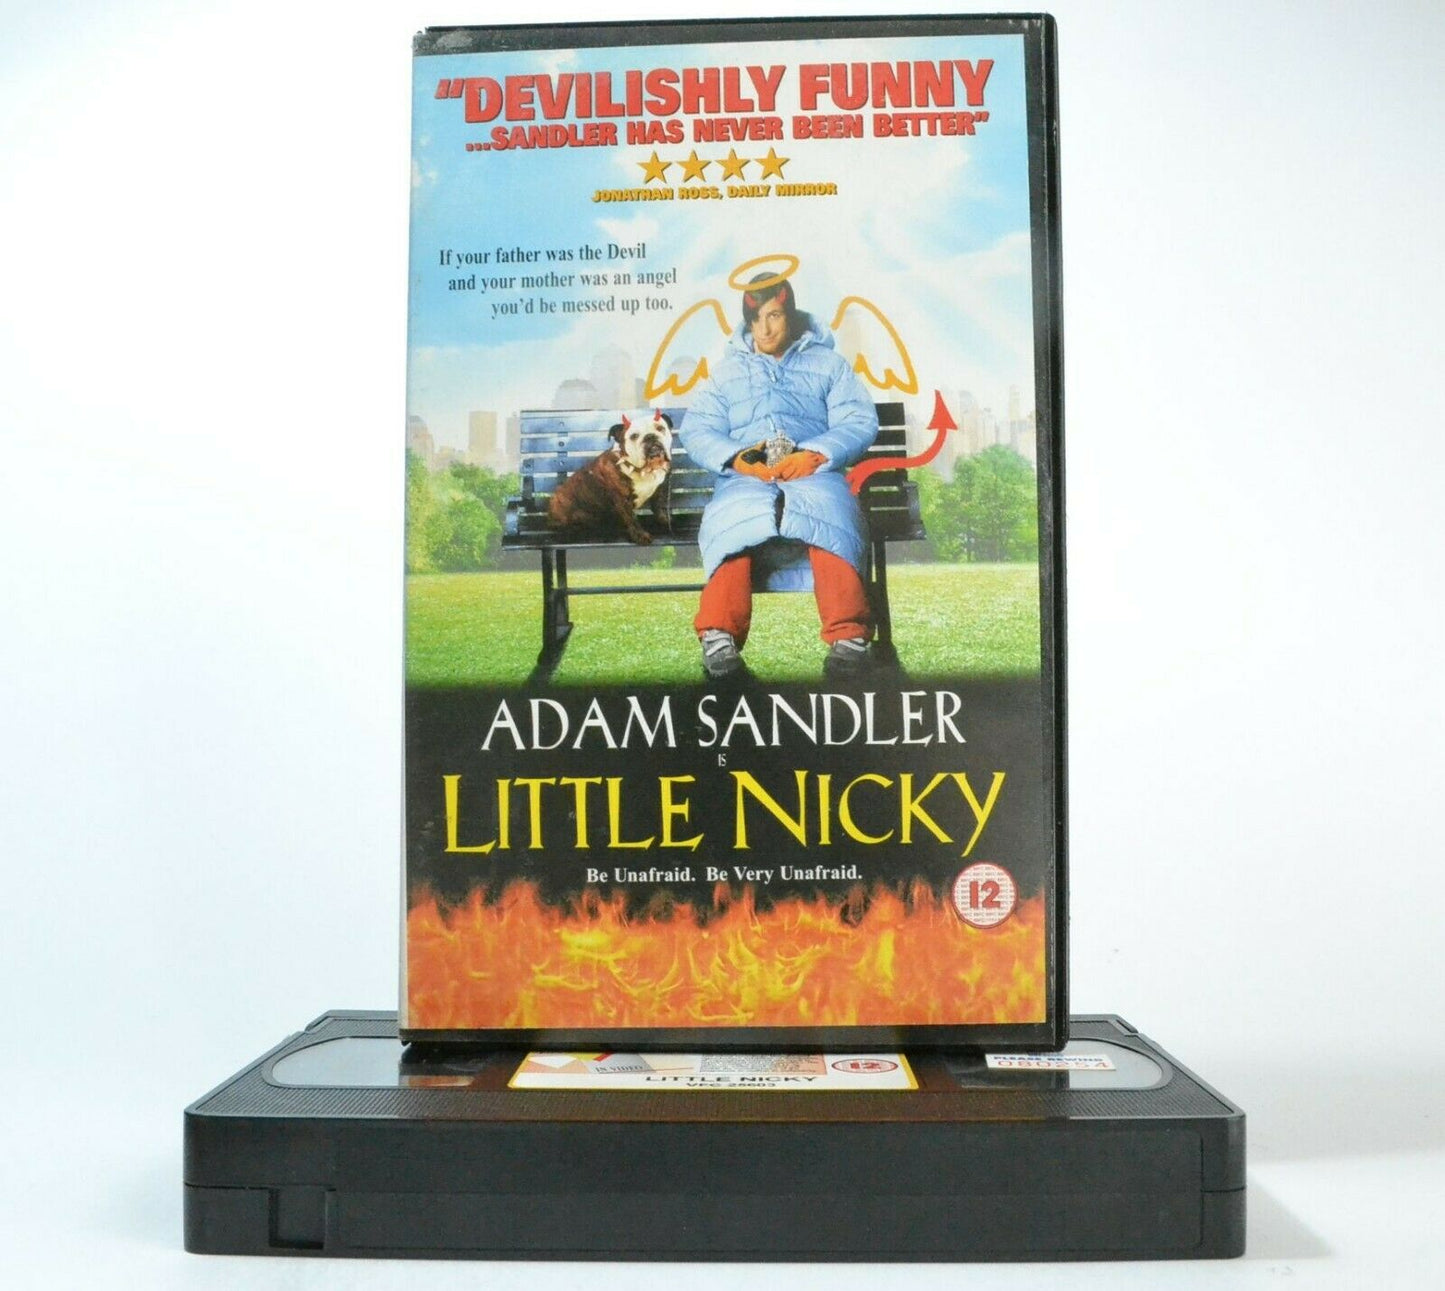 Little Nicky (2000): Satan's Failure Son - Fantasy Comedy - Adam Sandler - VHS-